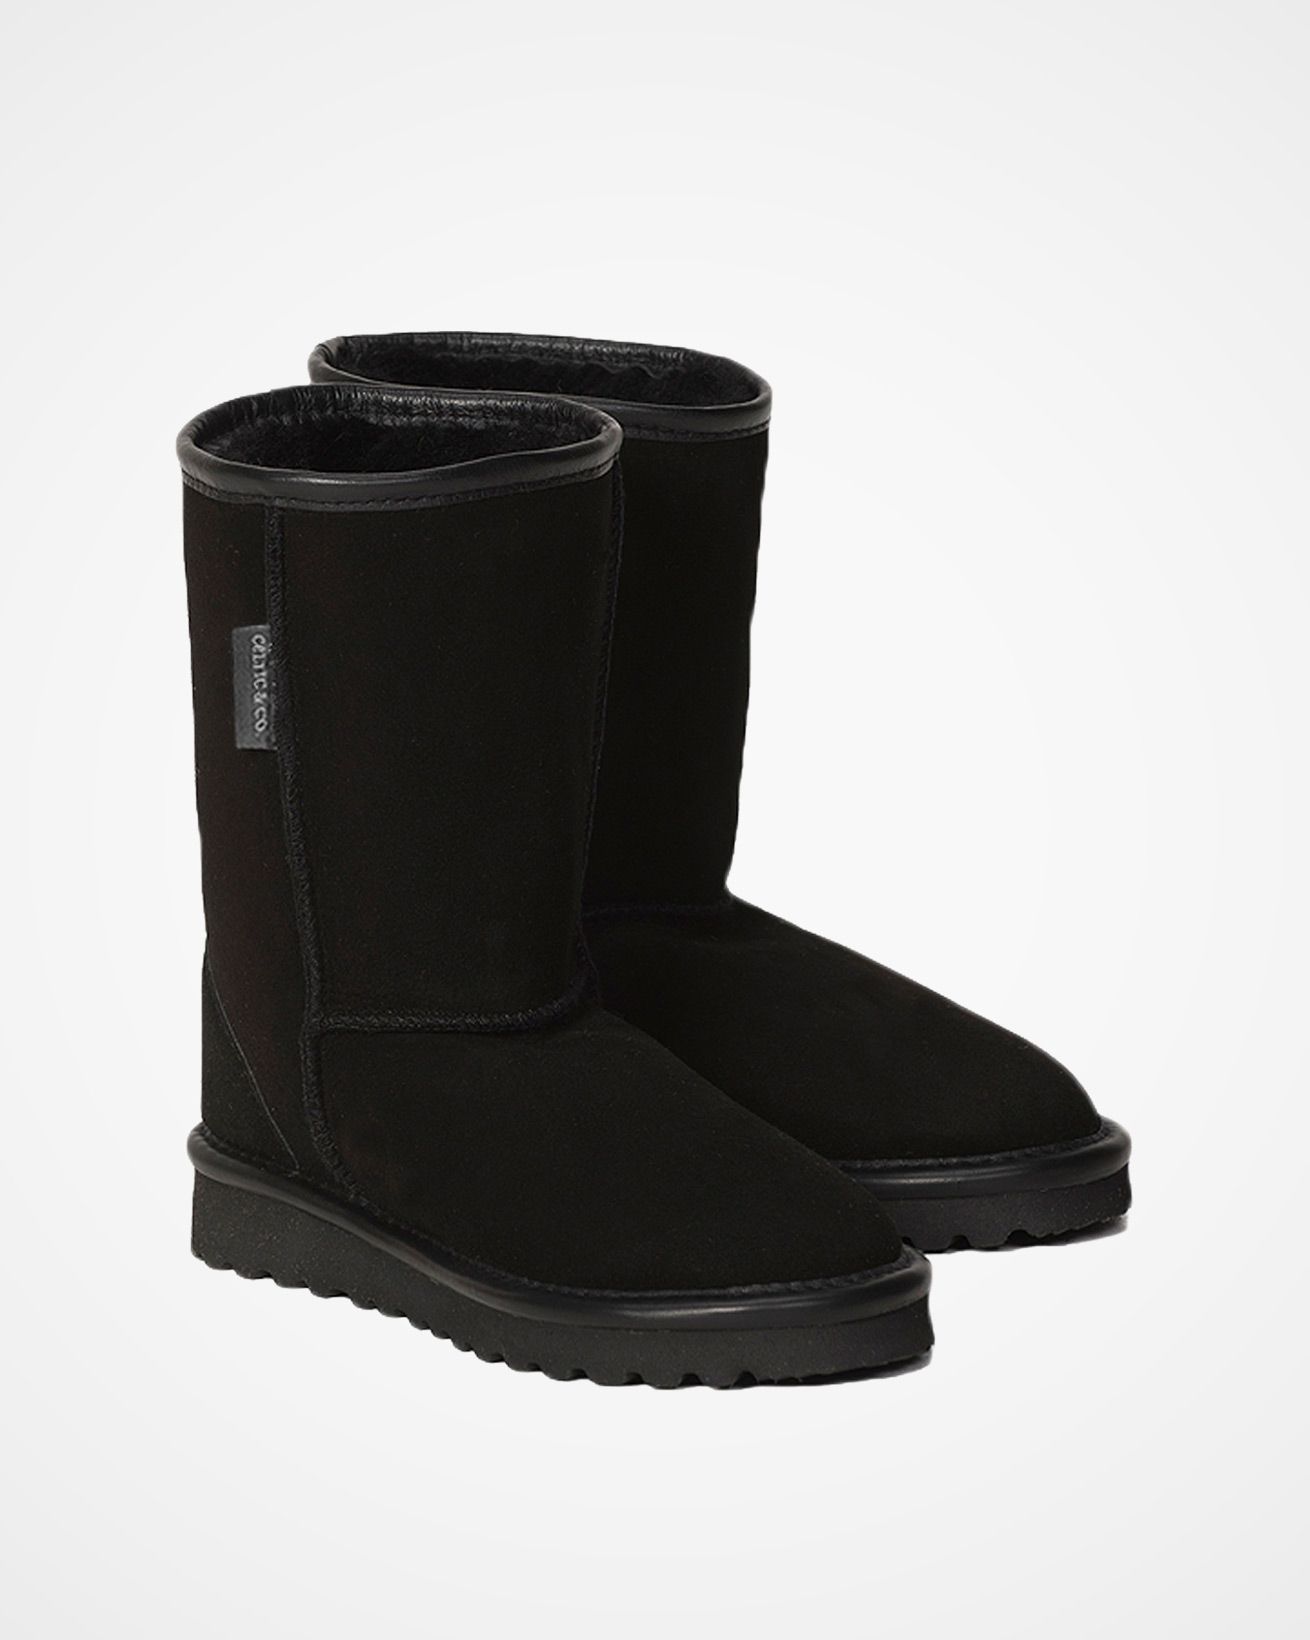 5894_classic-sheepskin-boots-regular_black_pair.jpg